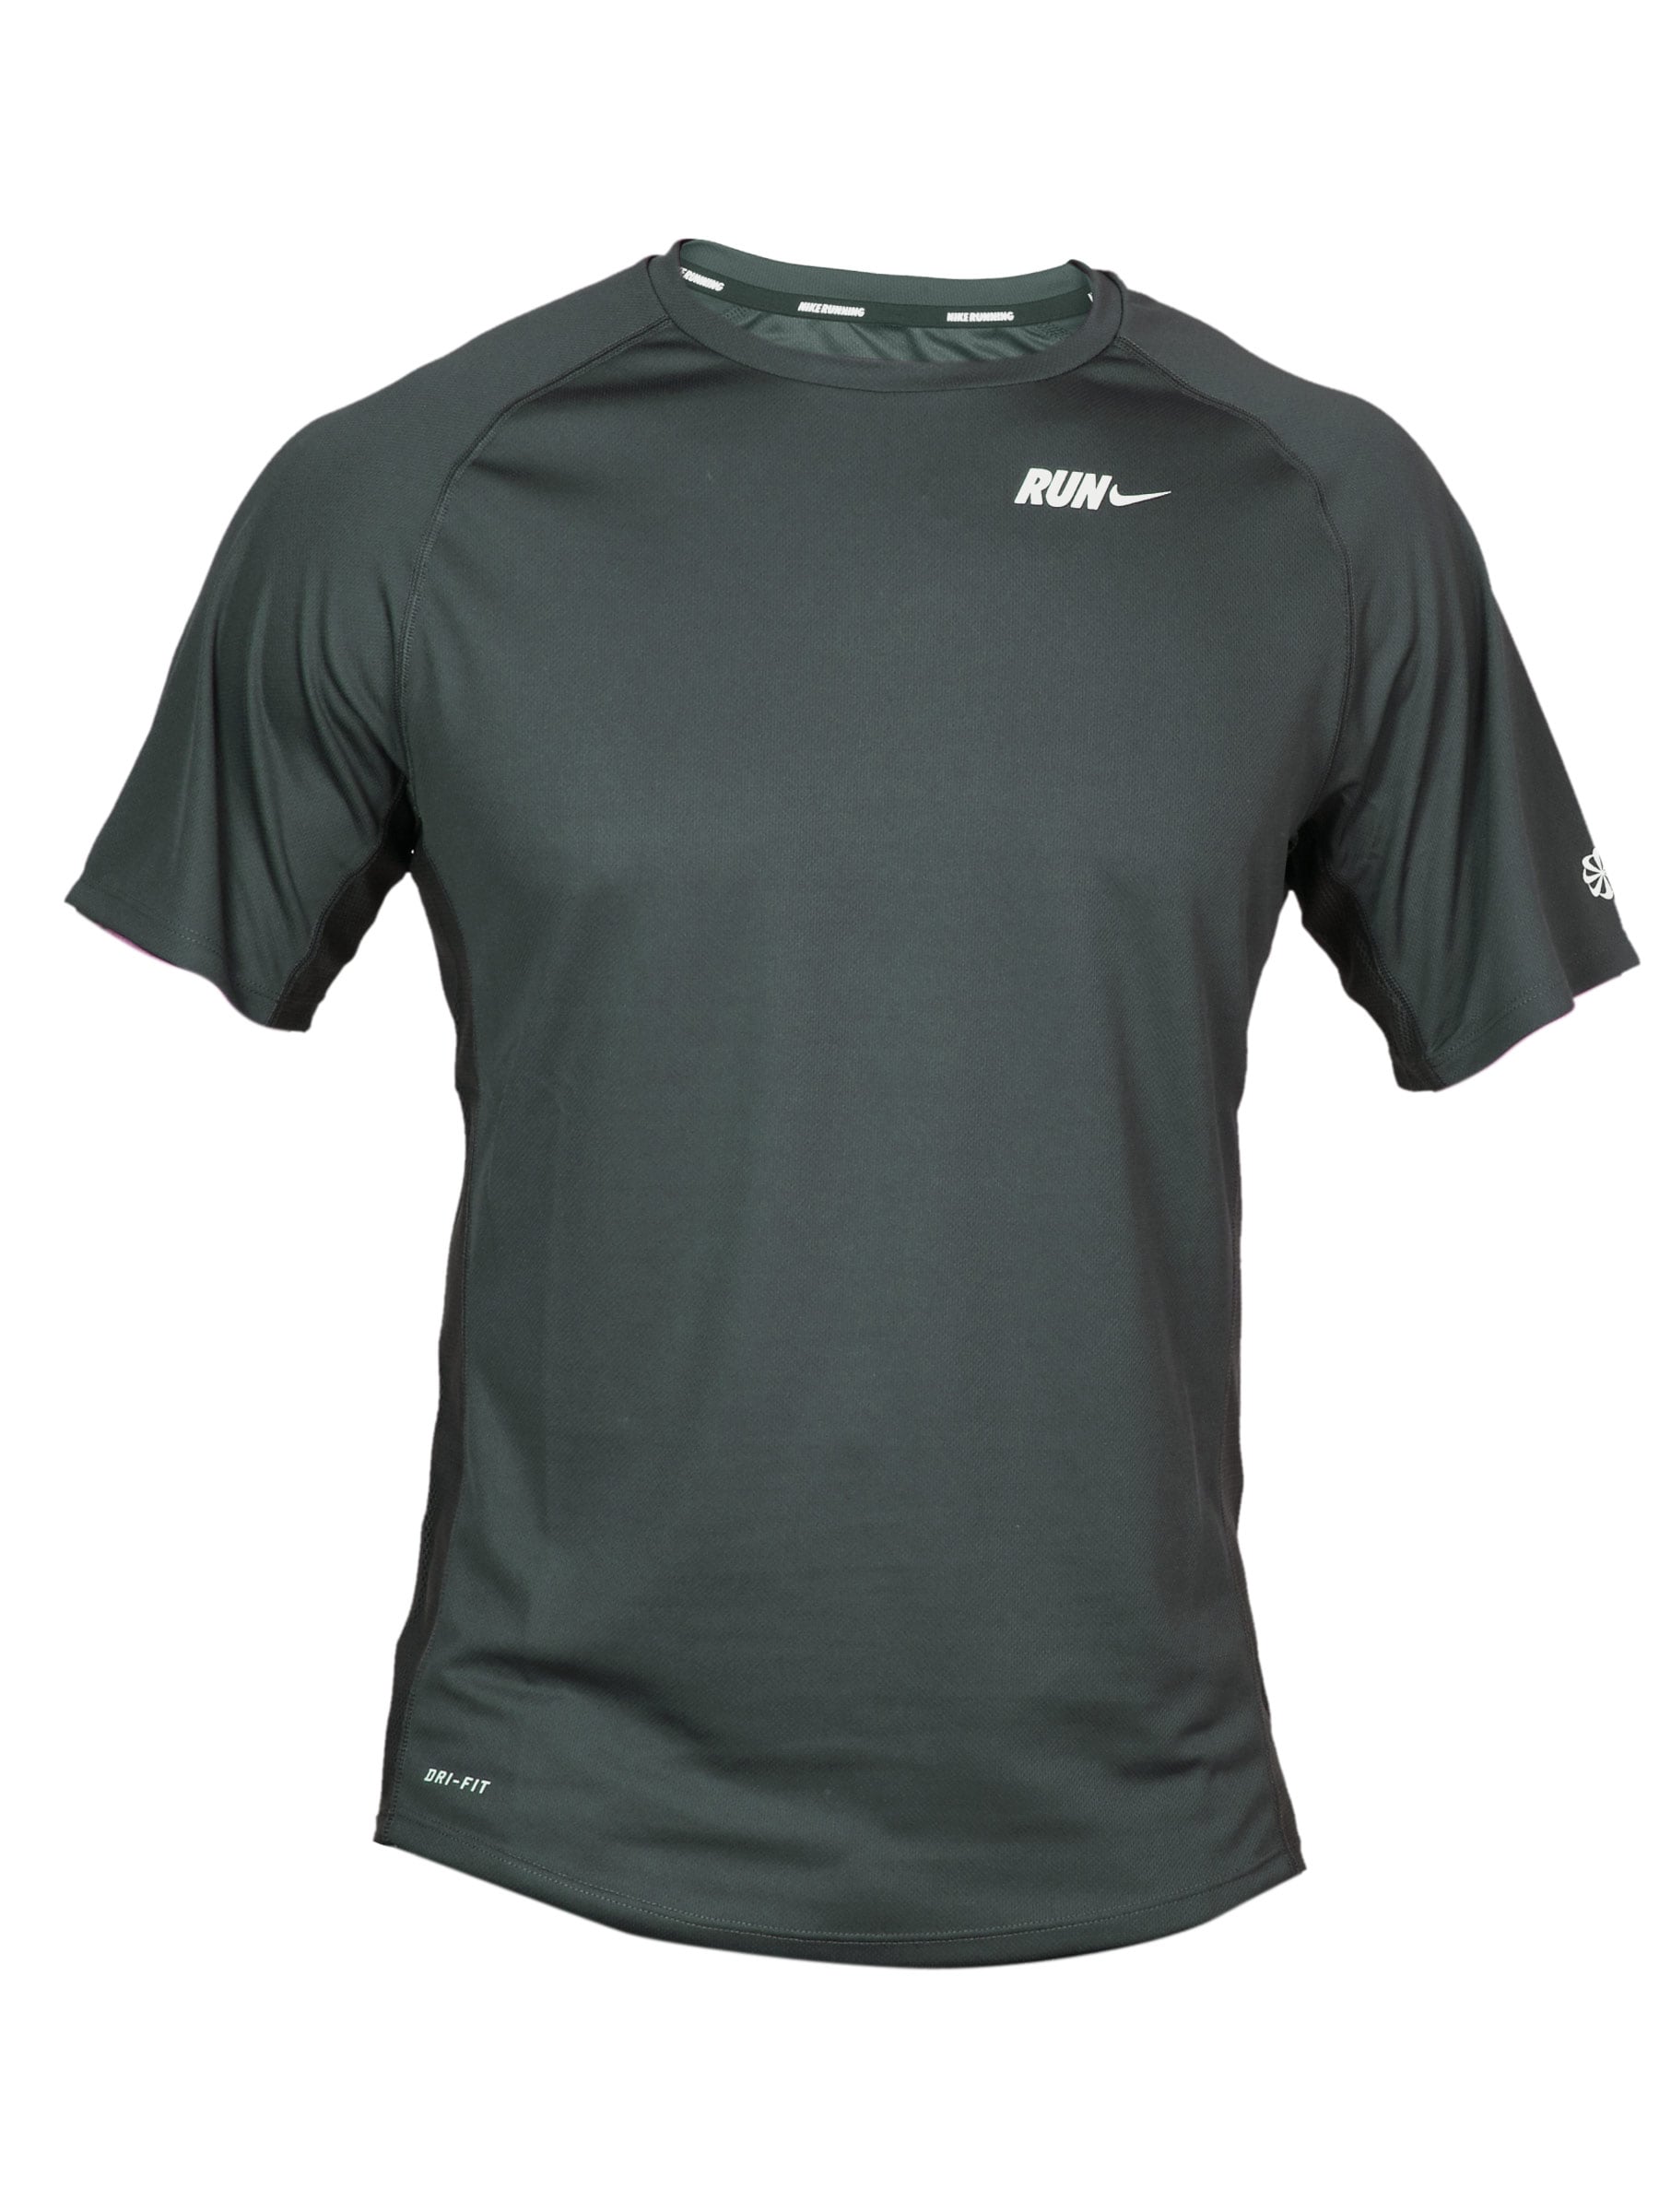 Nike Men's Sublimated Dark Grey T-shirt